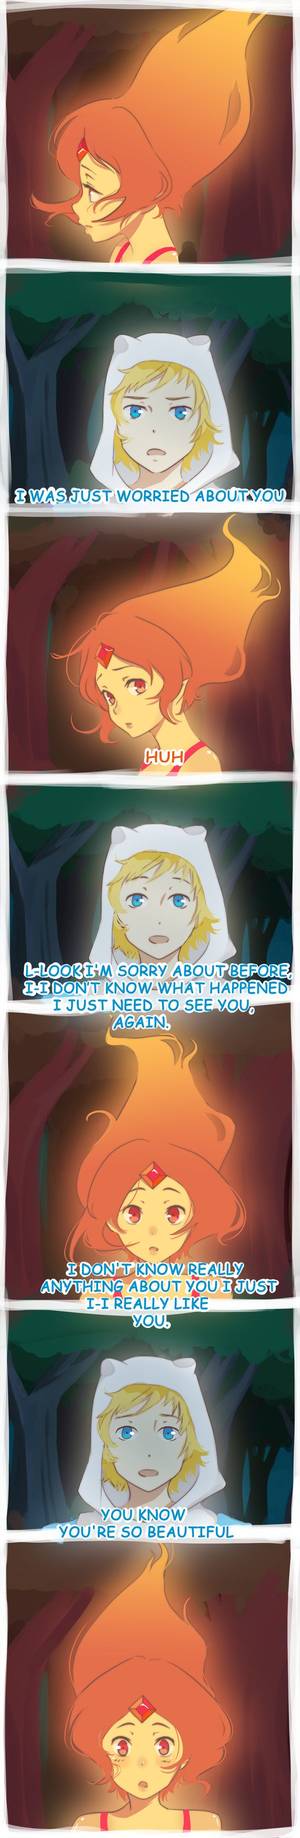 Emerald Princess Adventure Time Porn - Finn and Flame Princess, Adventure Time-- anime style